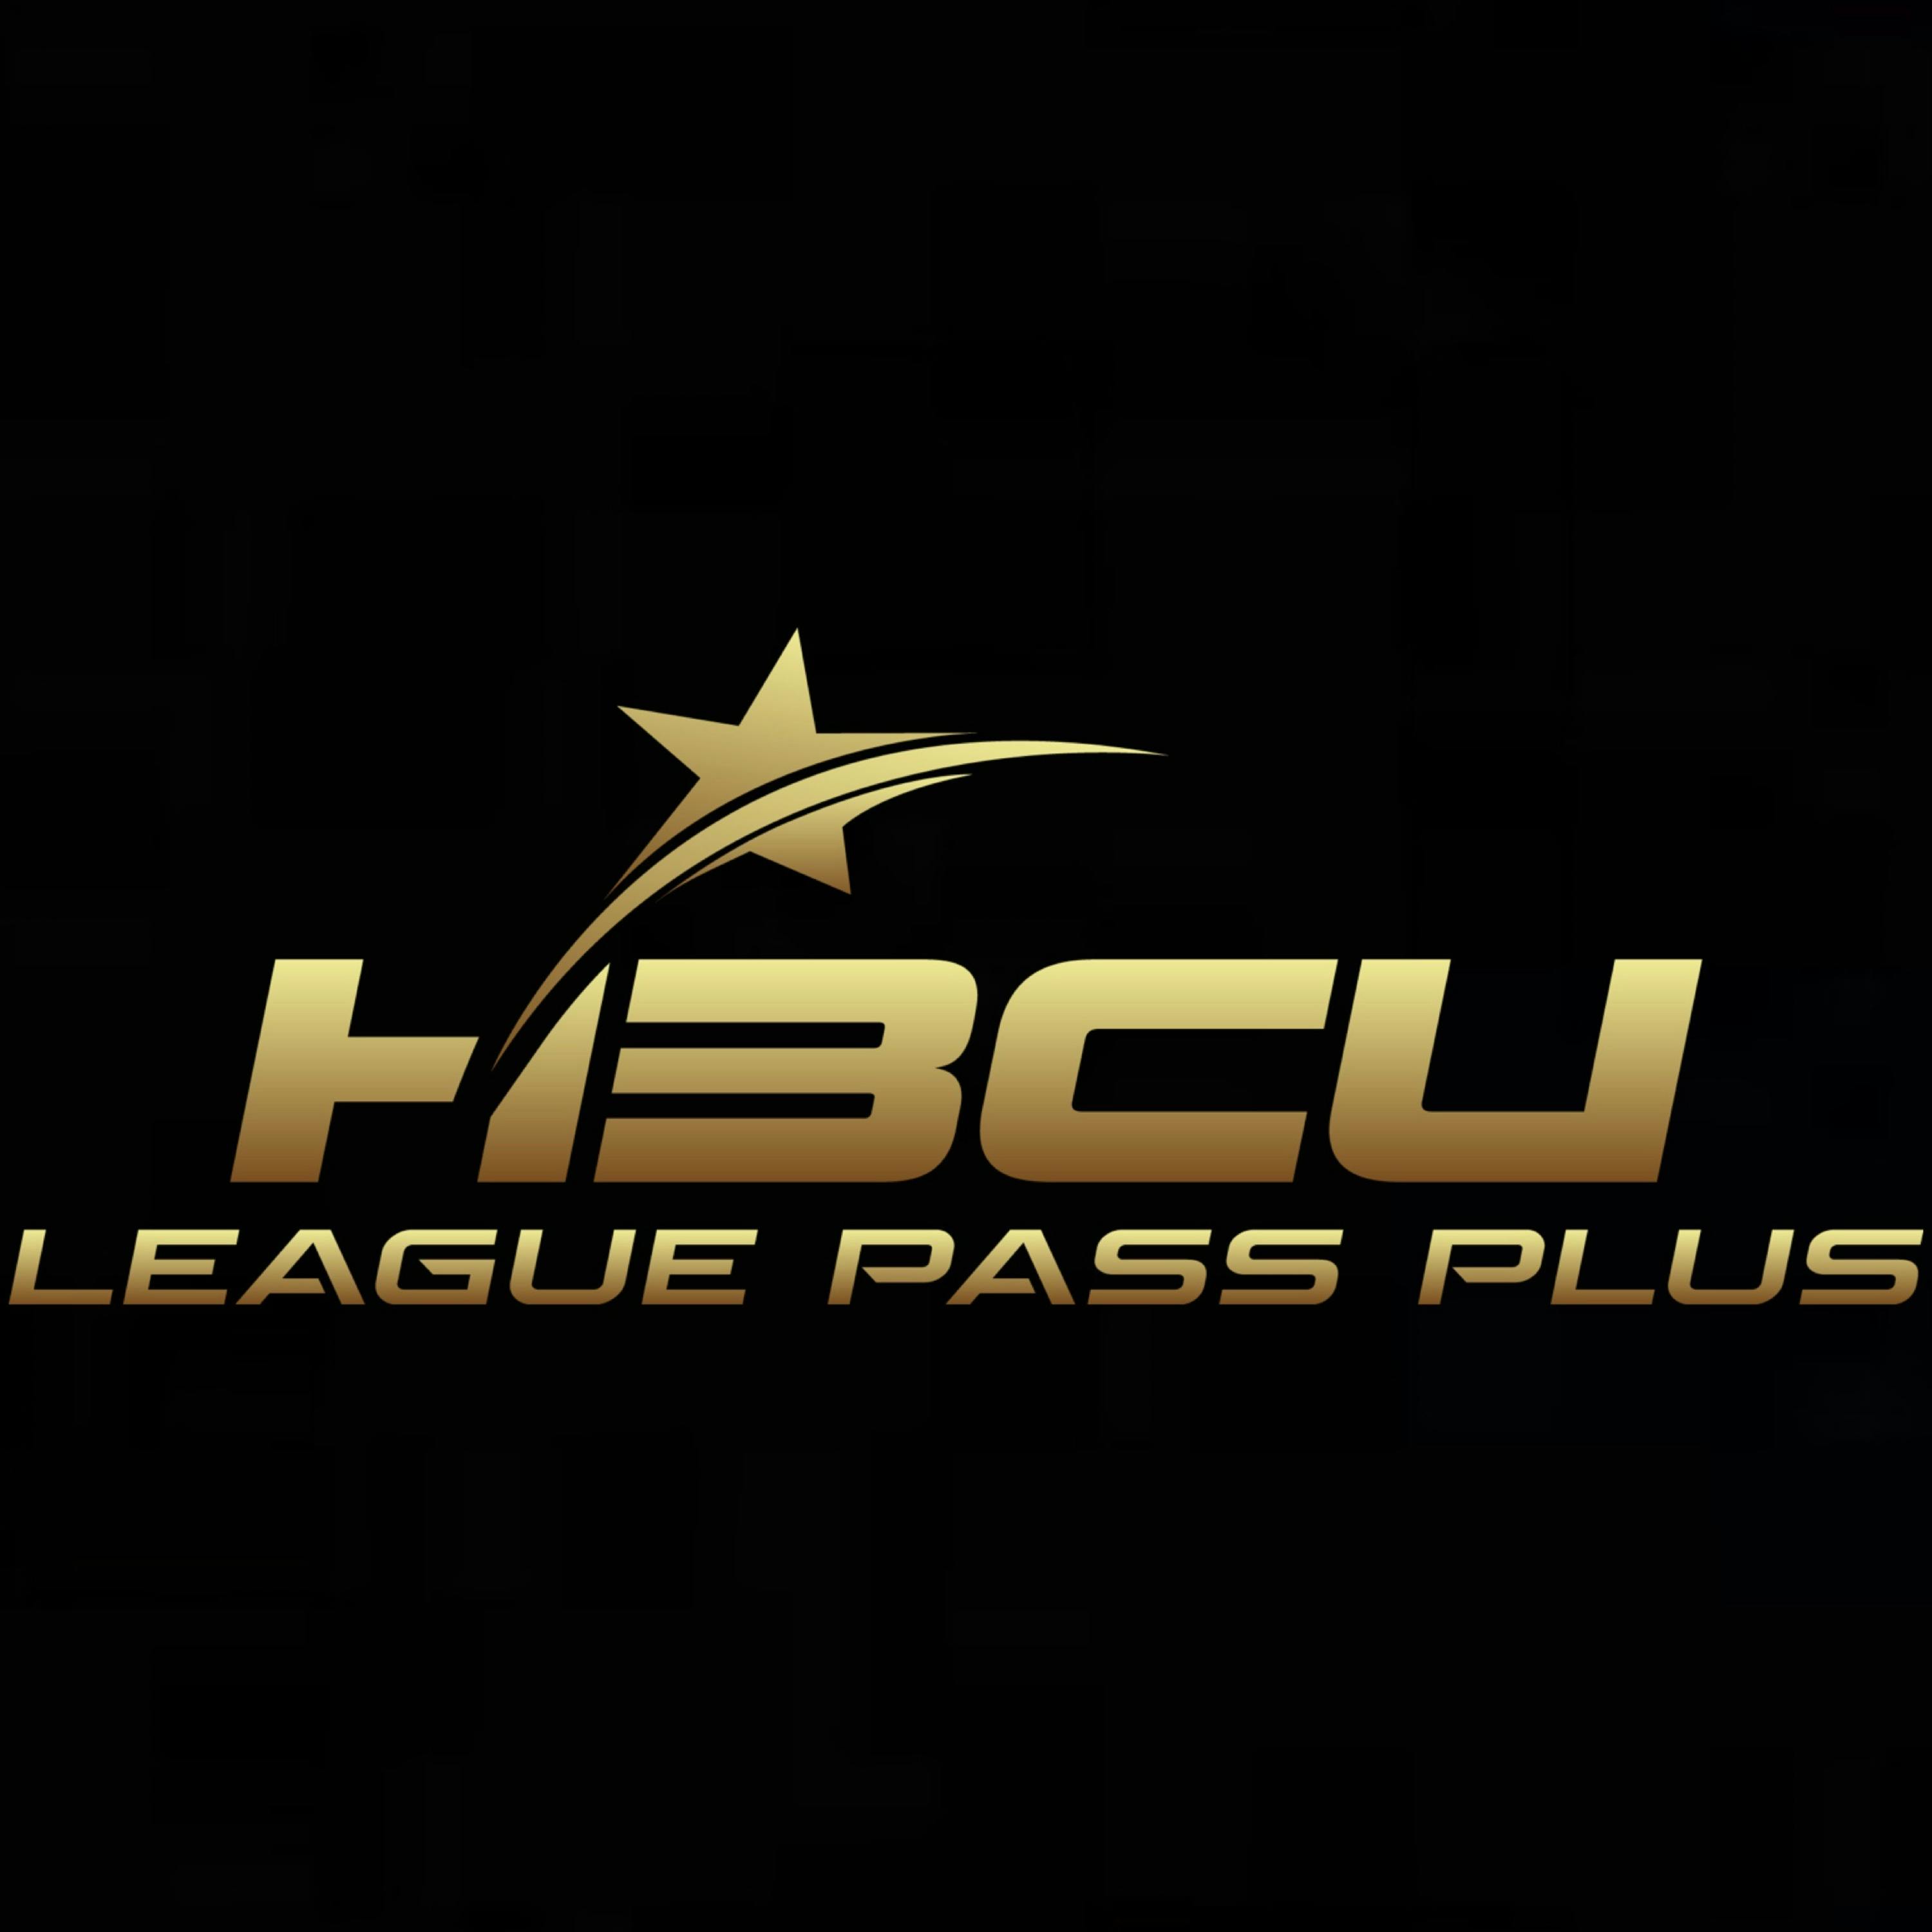 HBCU Pulse Founder Randall Barnes On Partnering With Urban Edge Network & HBCU League Pass Plus